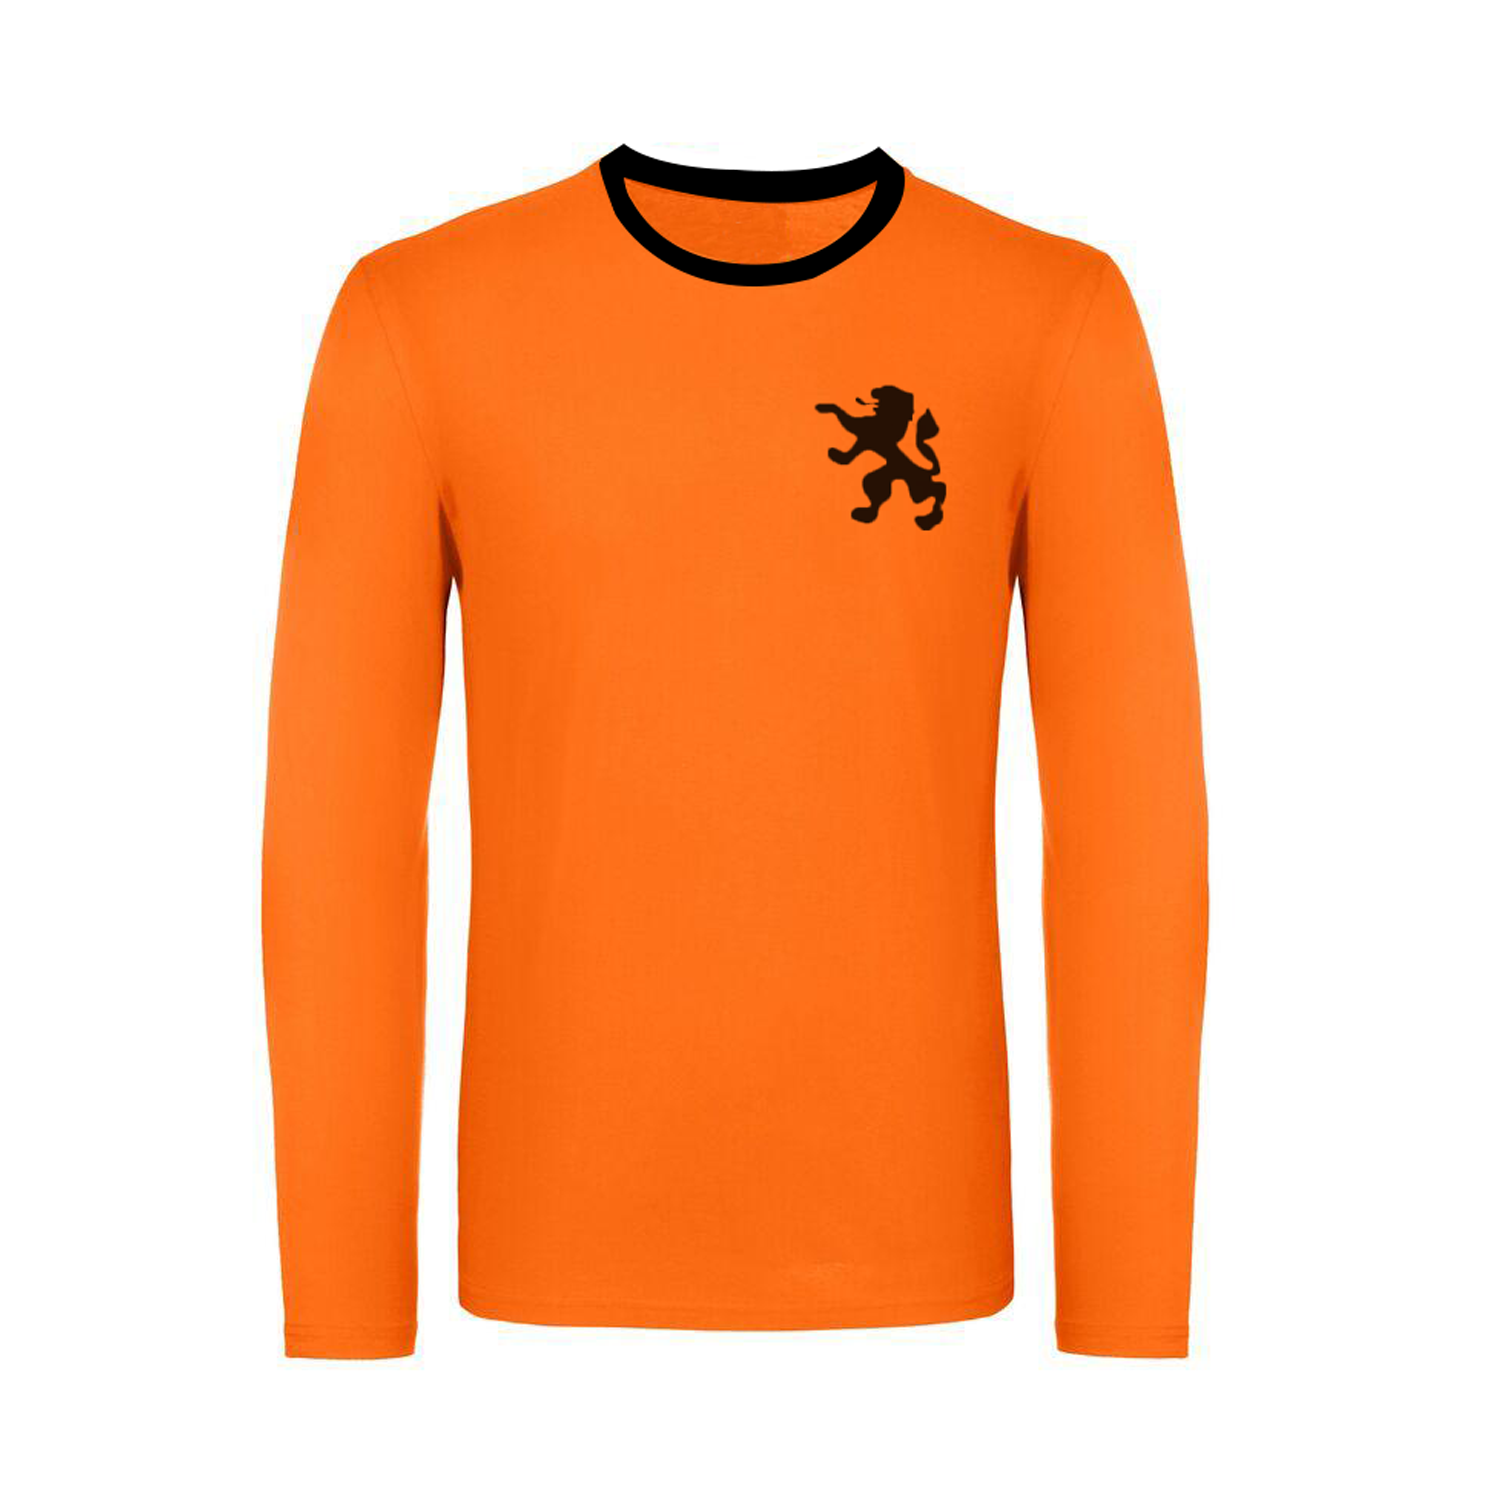 Oranje shirt leeuw kopen